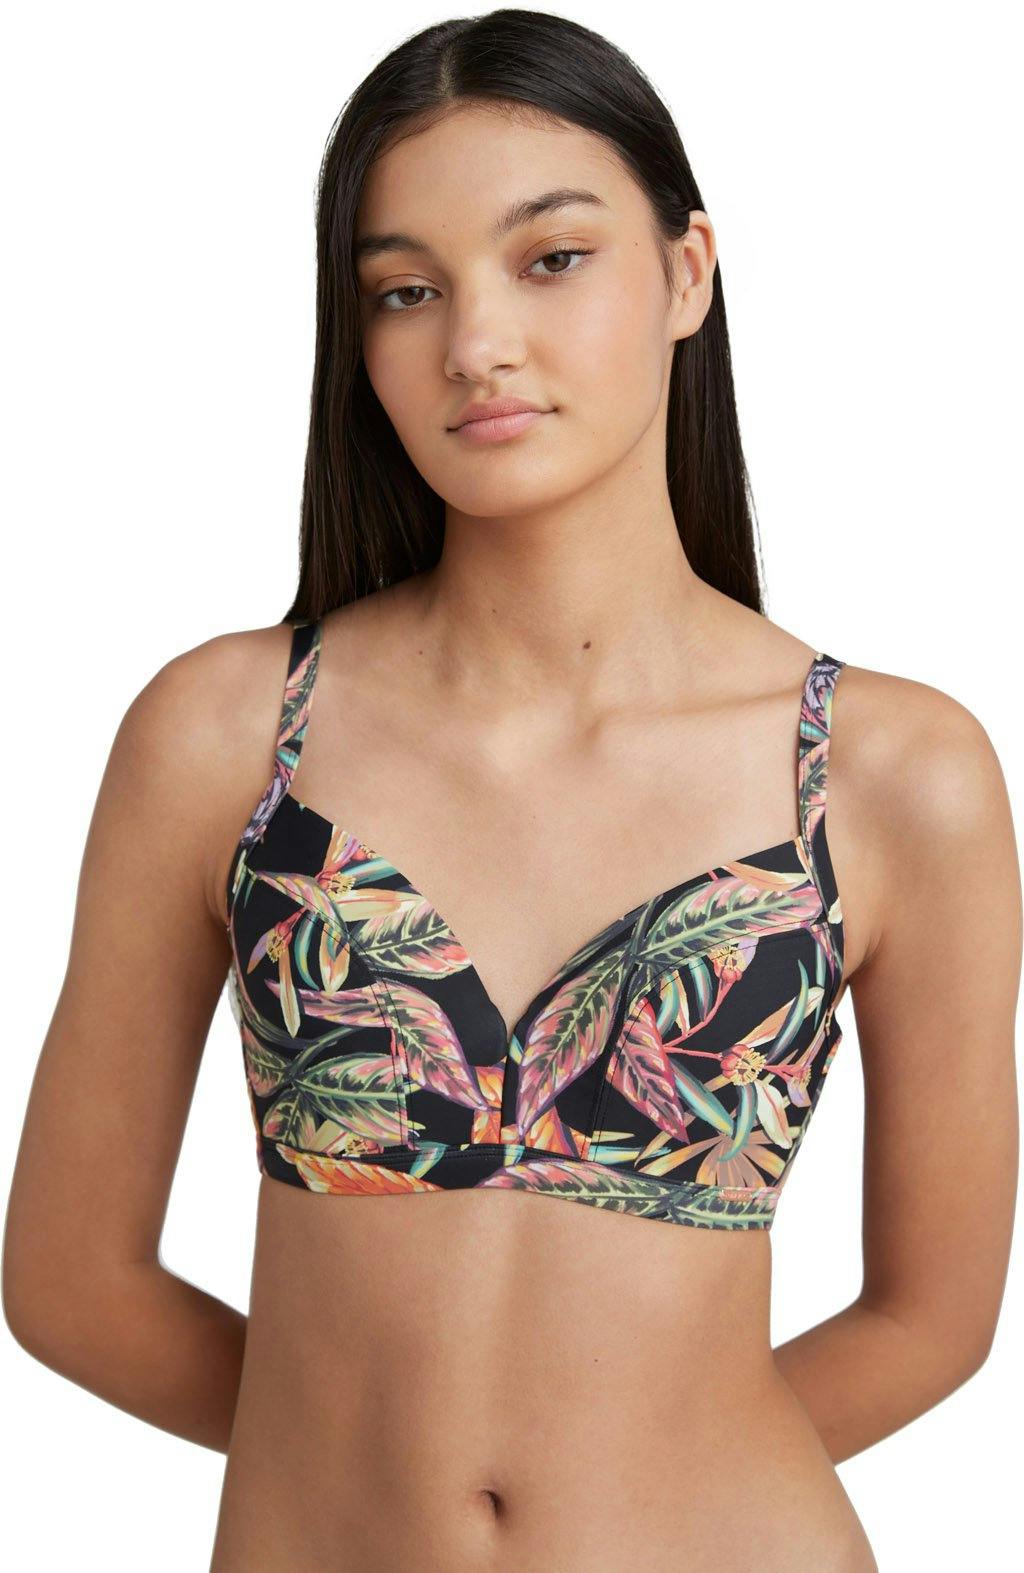 Product image for Panama Bikini Top - Women's